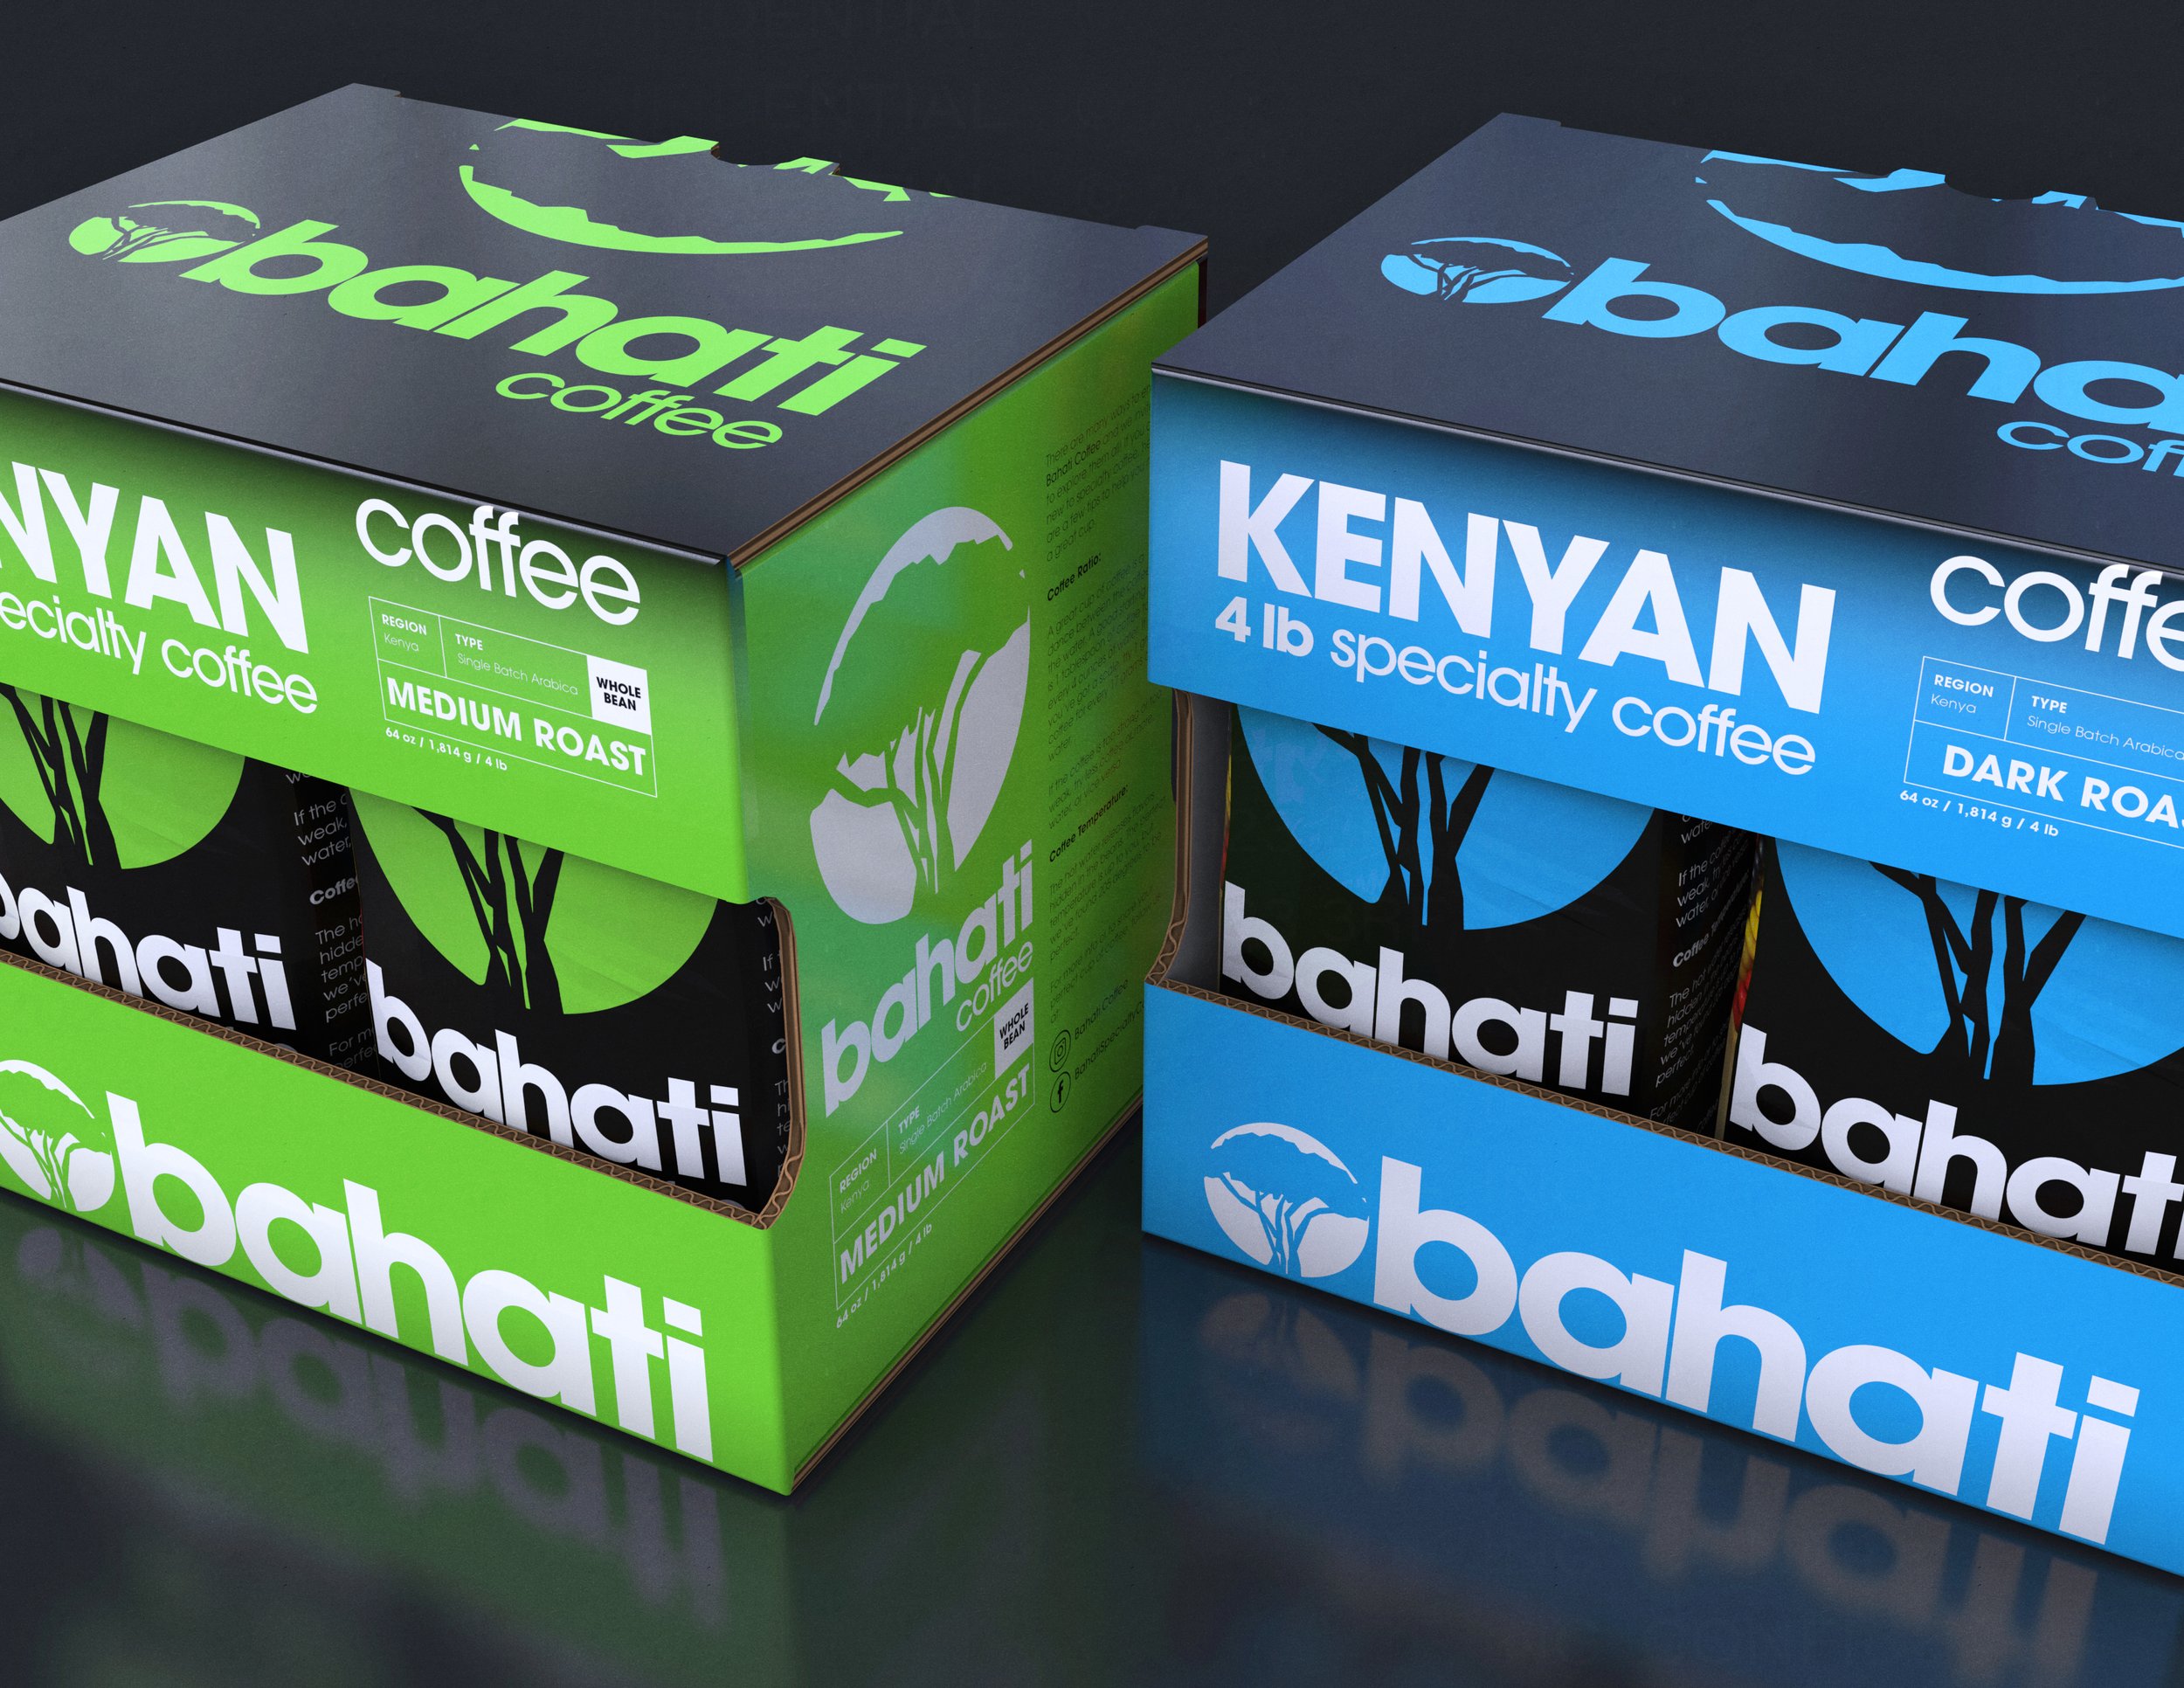 Bahati Coffee - Club Store Pallet Display